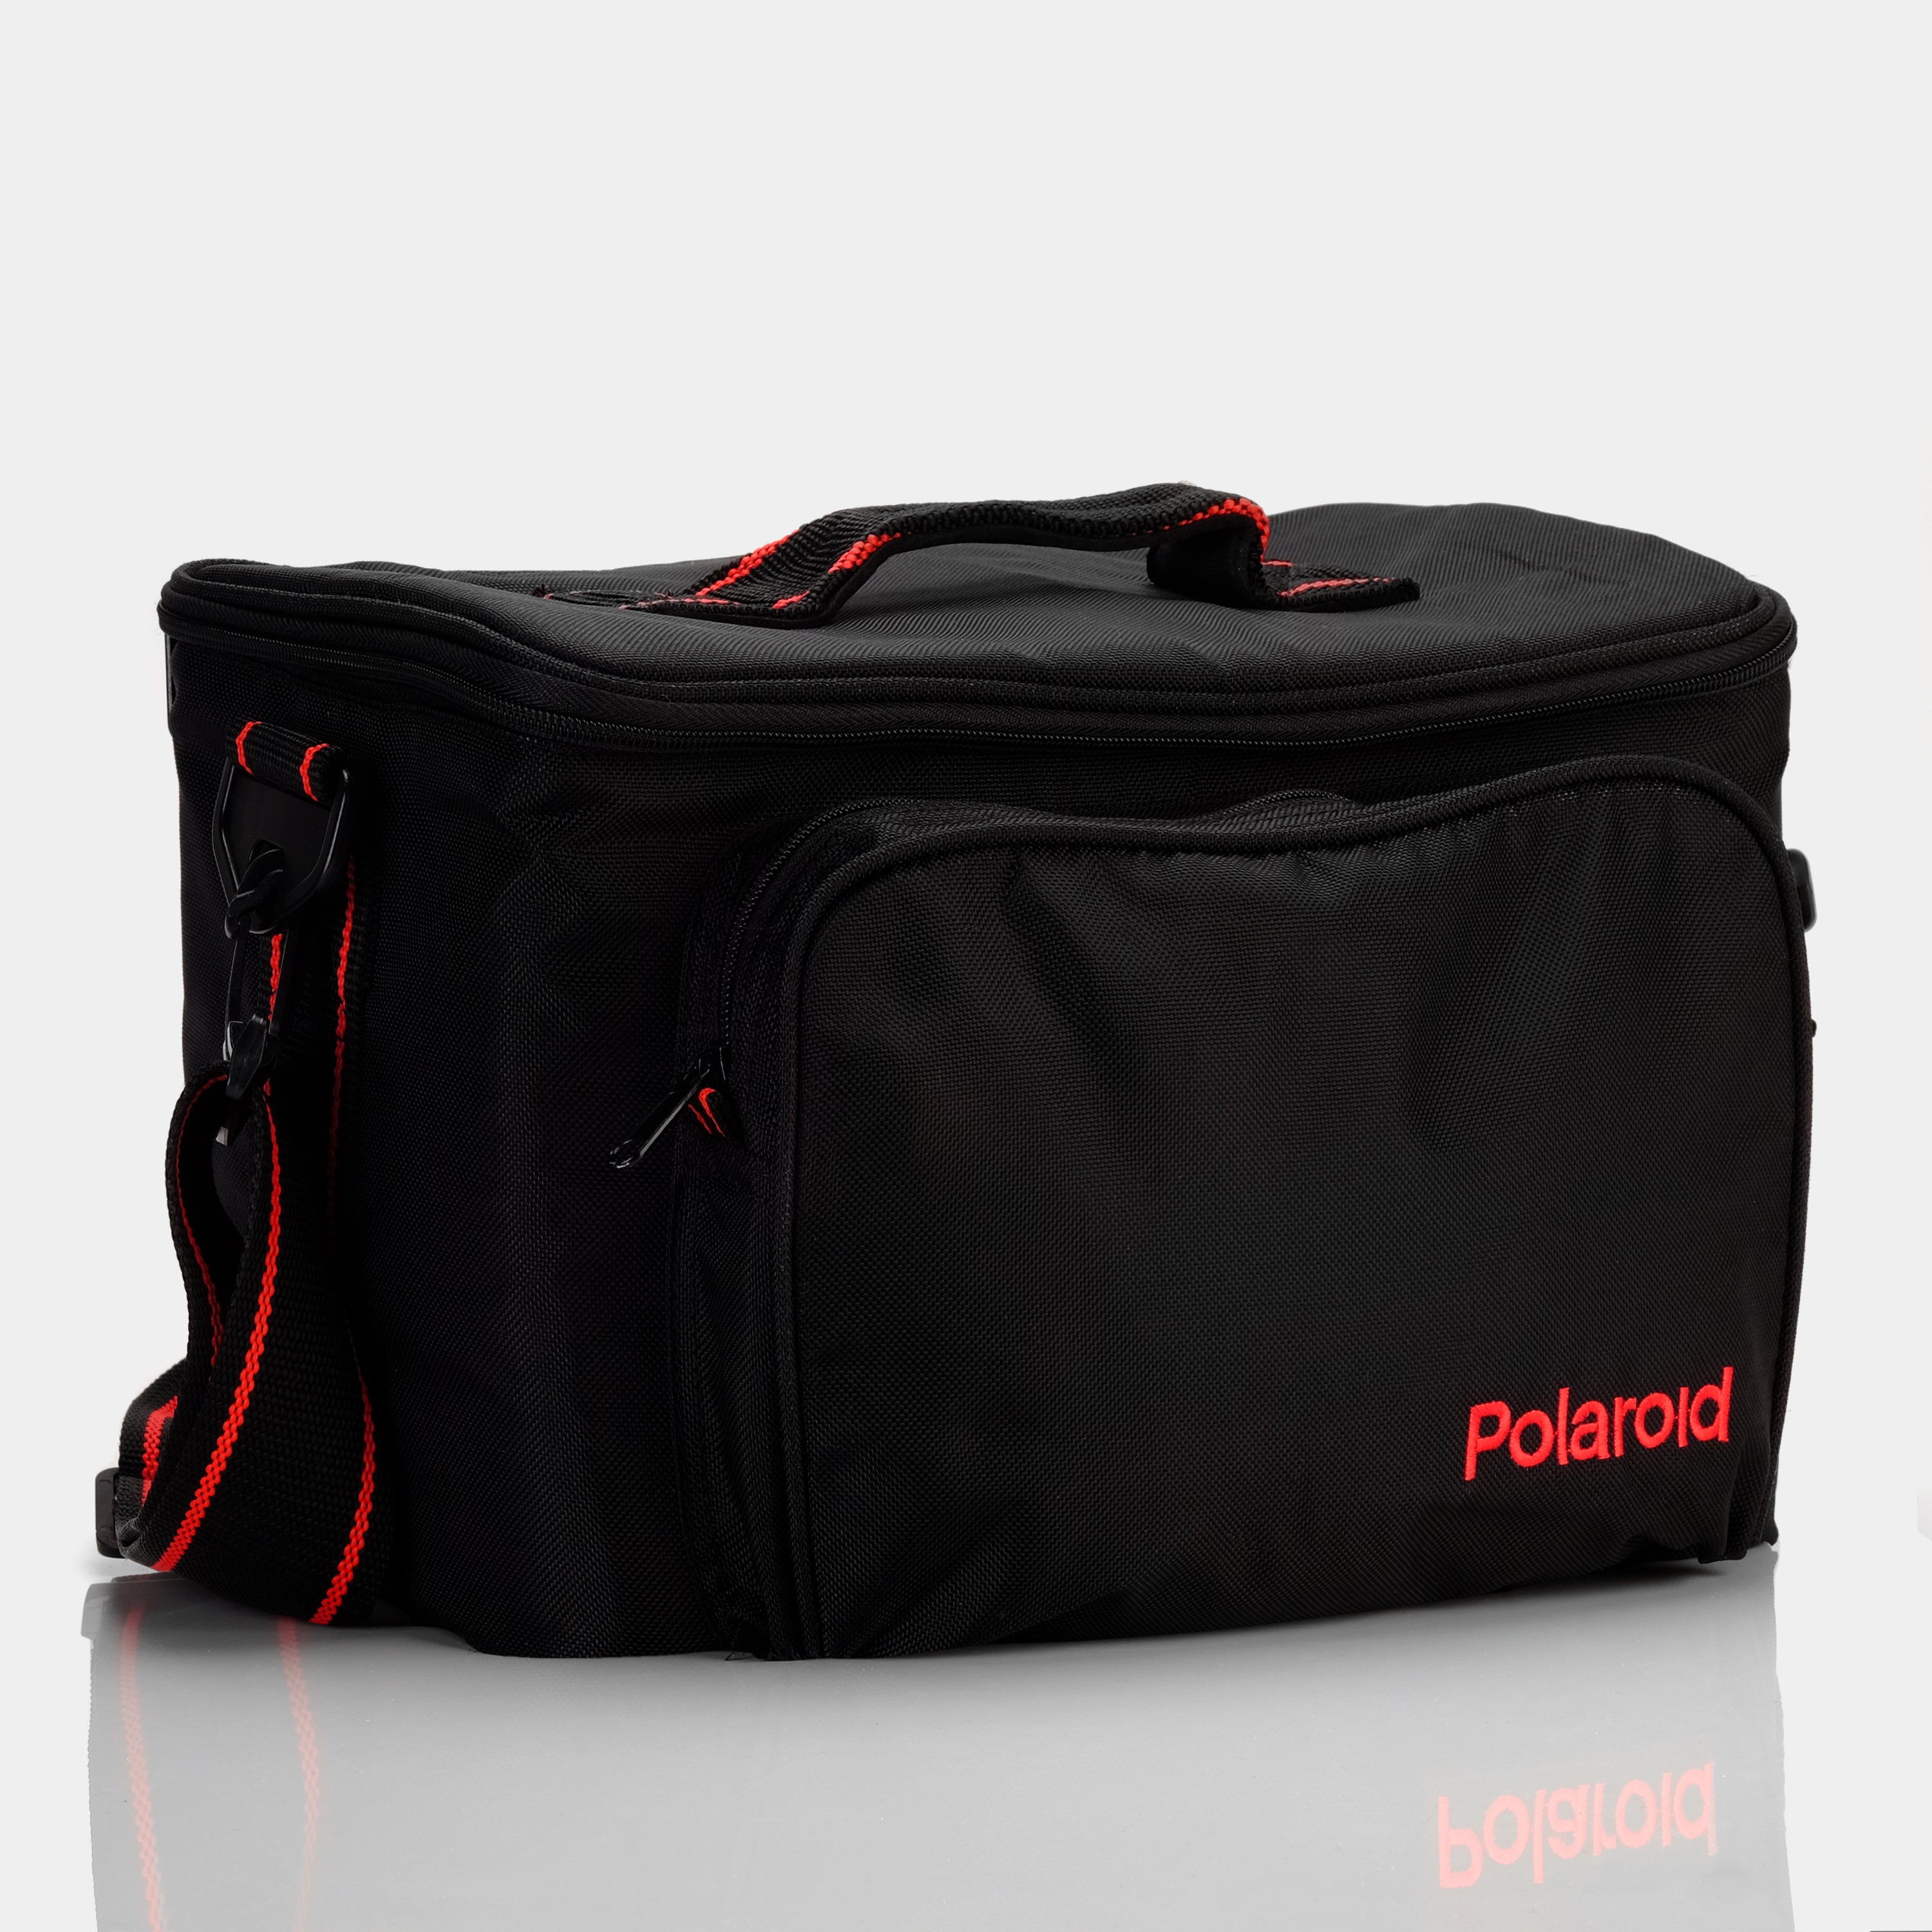 Red & Black Polaroid Insulated Camera Bag